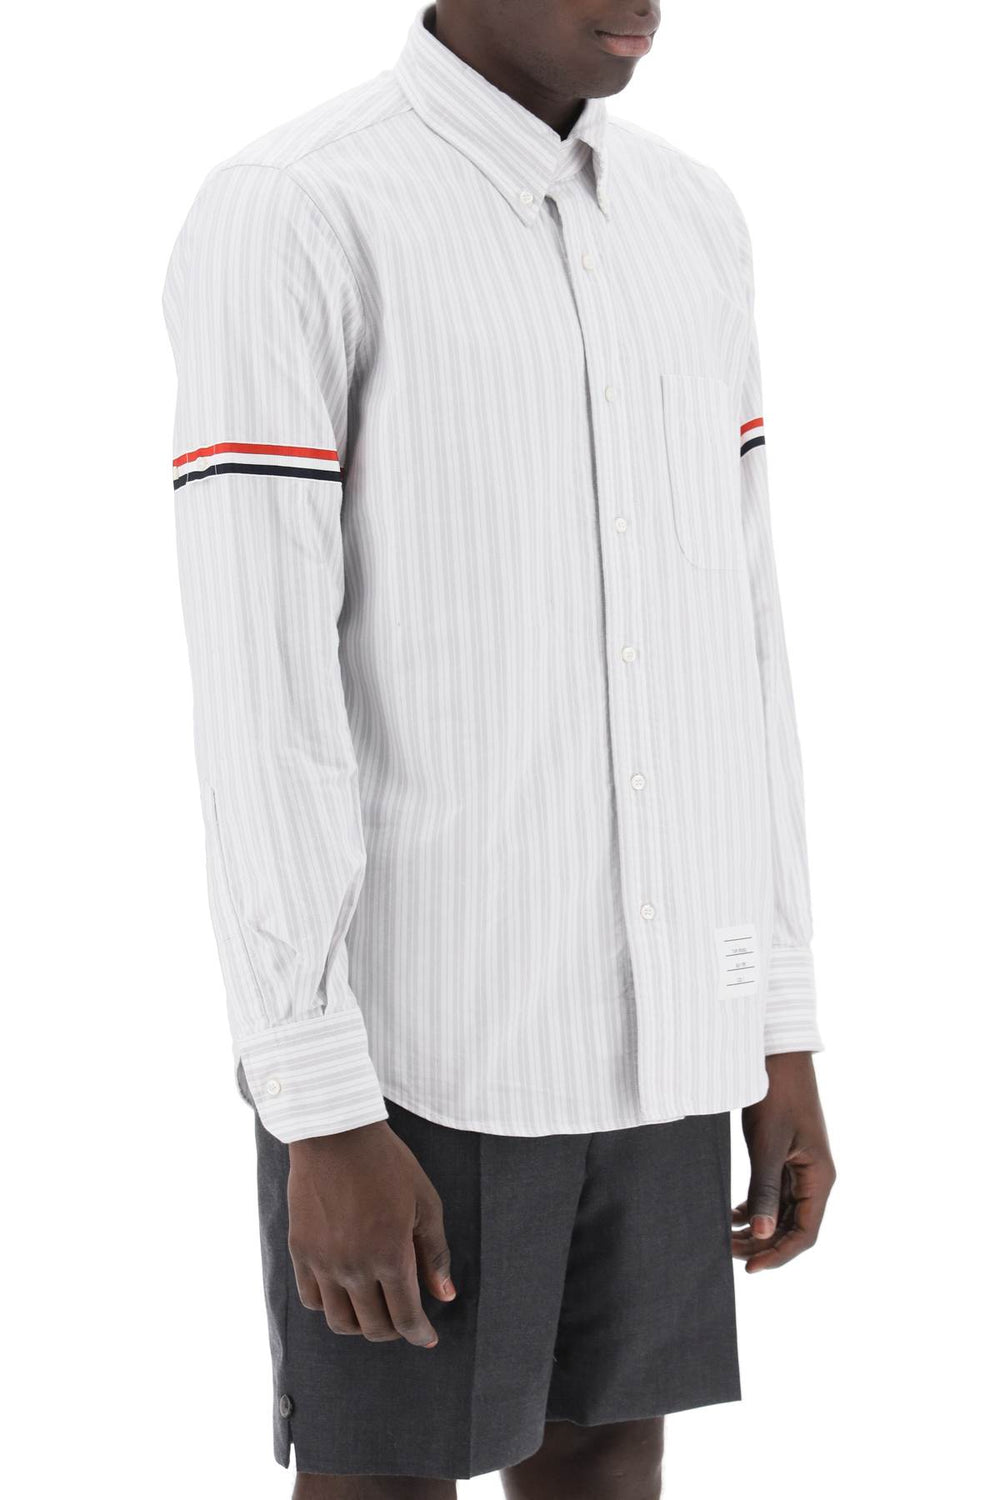 Thom browne striped oxford shirt-1